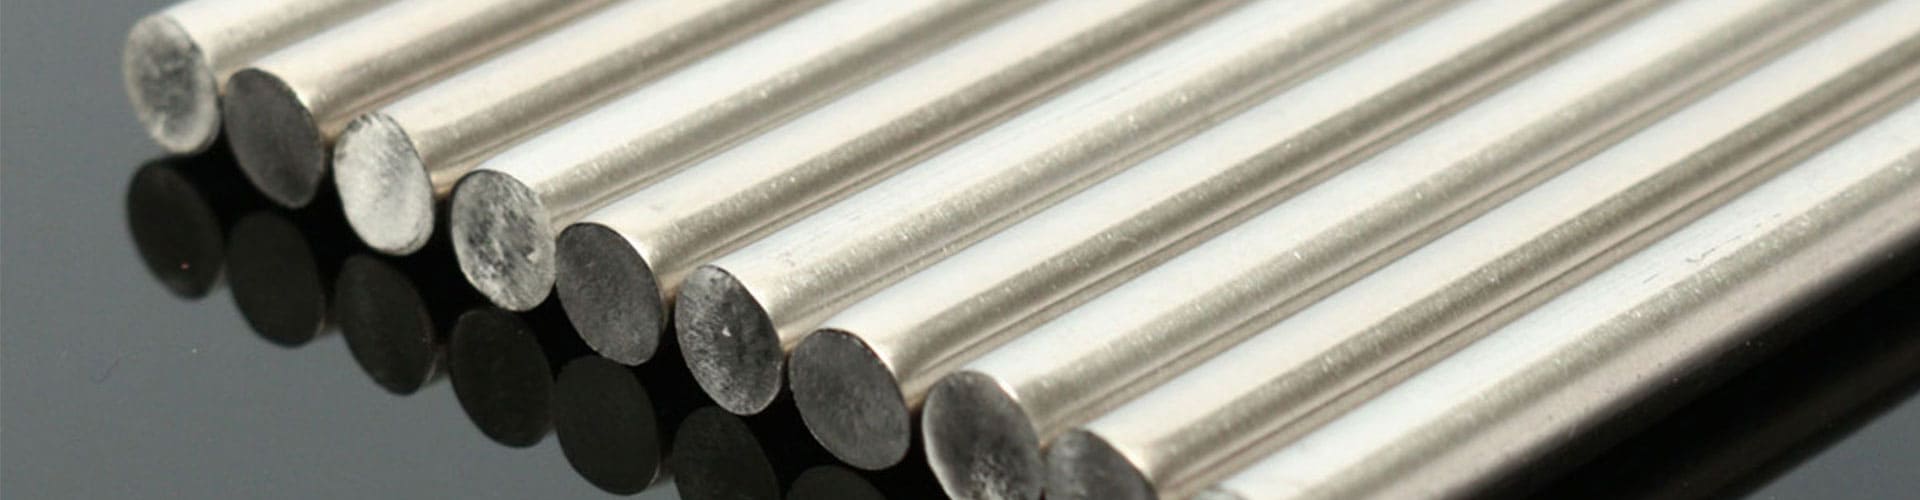 nickel-alloy-201-round-bars-rods-manufacturer-exporter-supplier